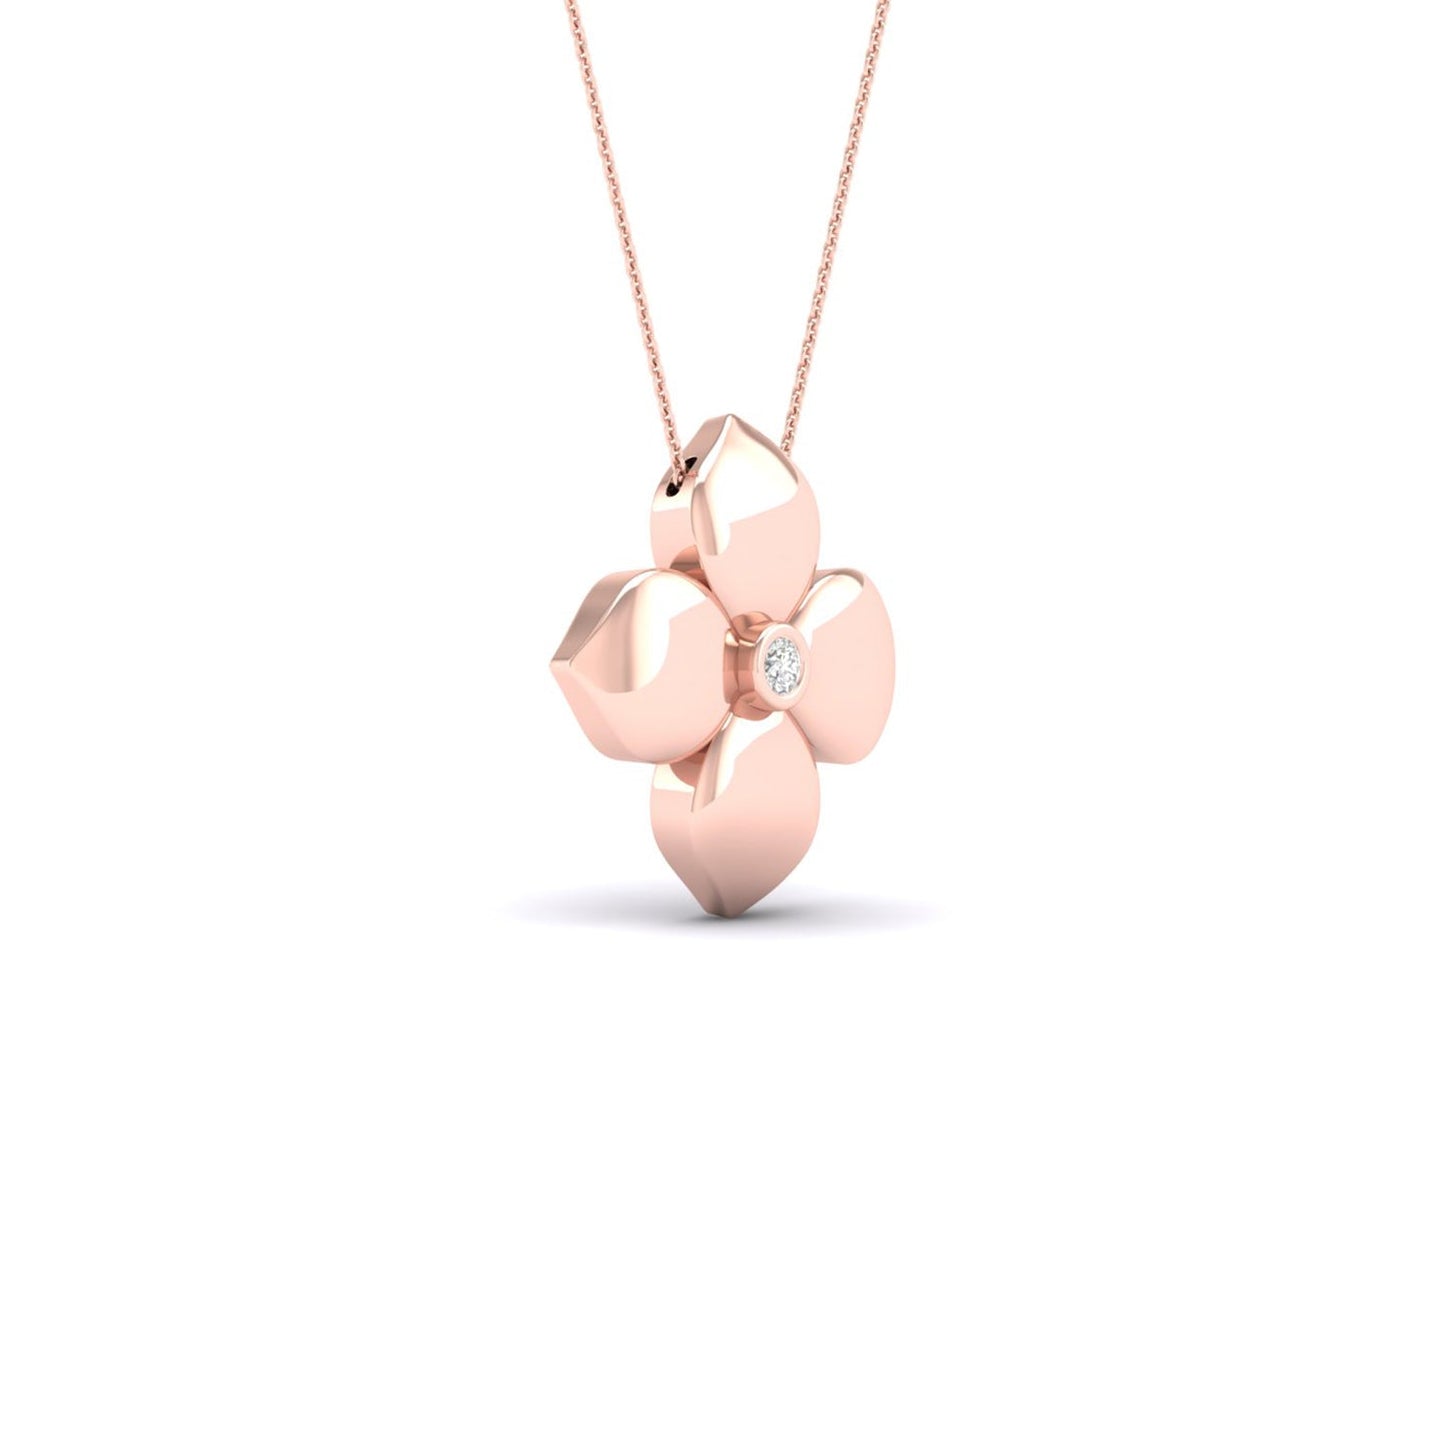 La Fleur Diamond Necklace_Product angle_1/2 Ct. - 2